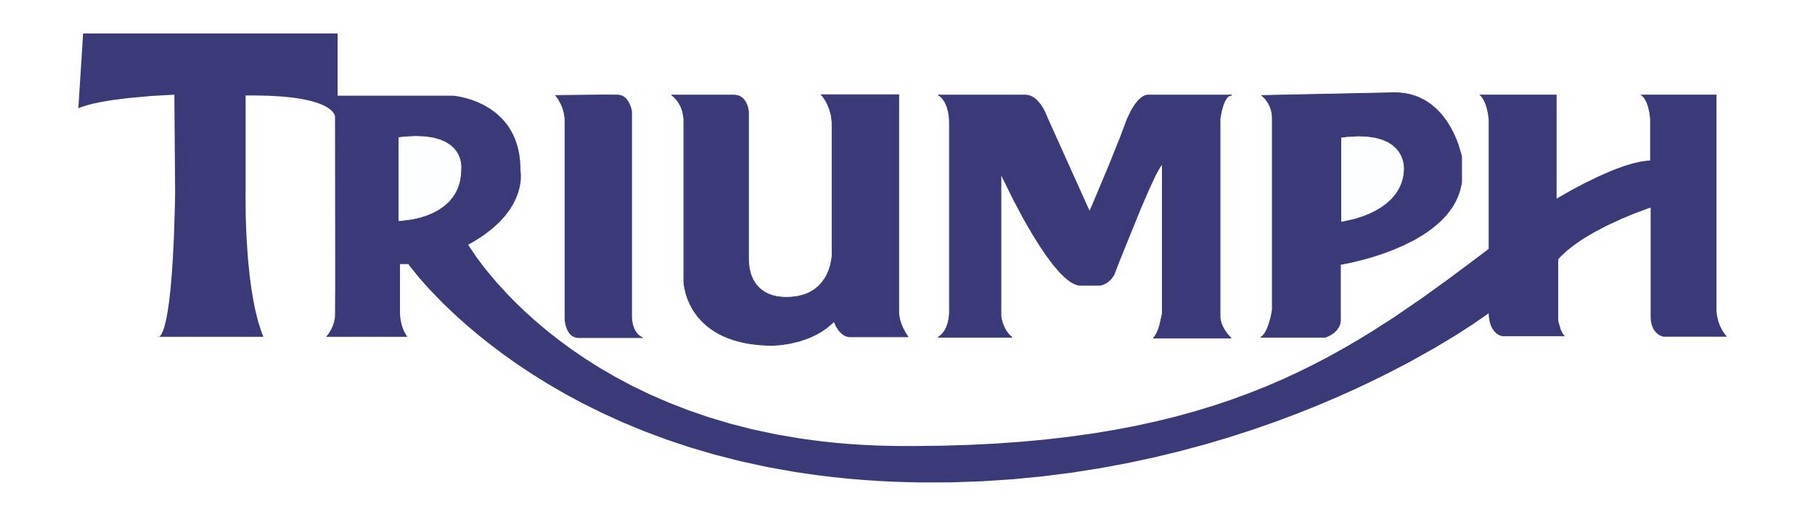 Triumph Motorcycles Logo Vect